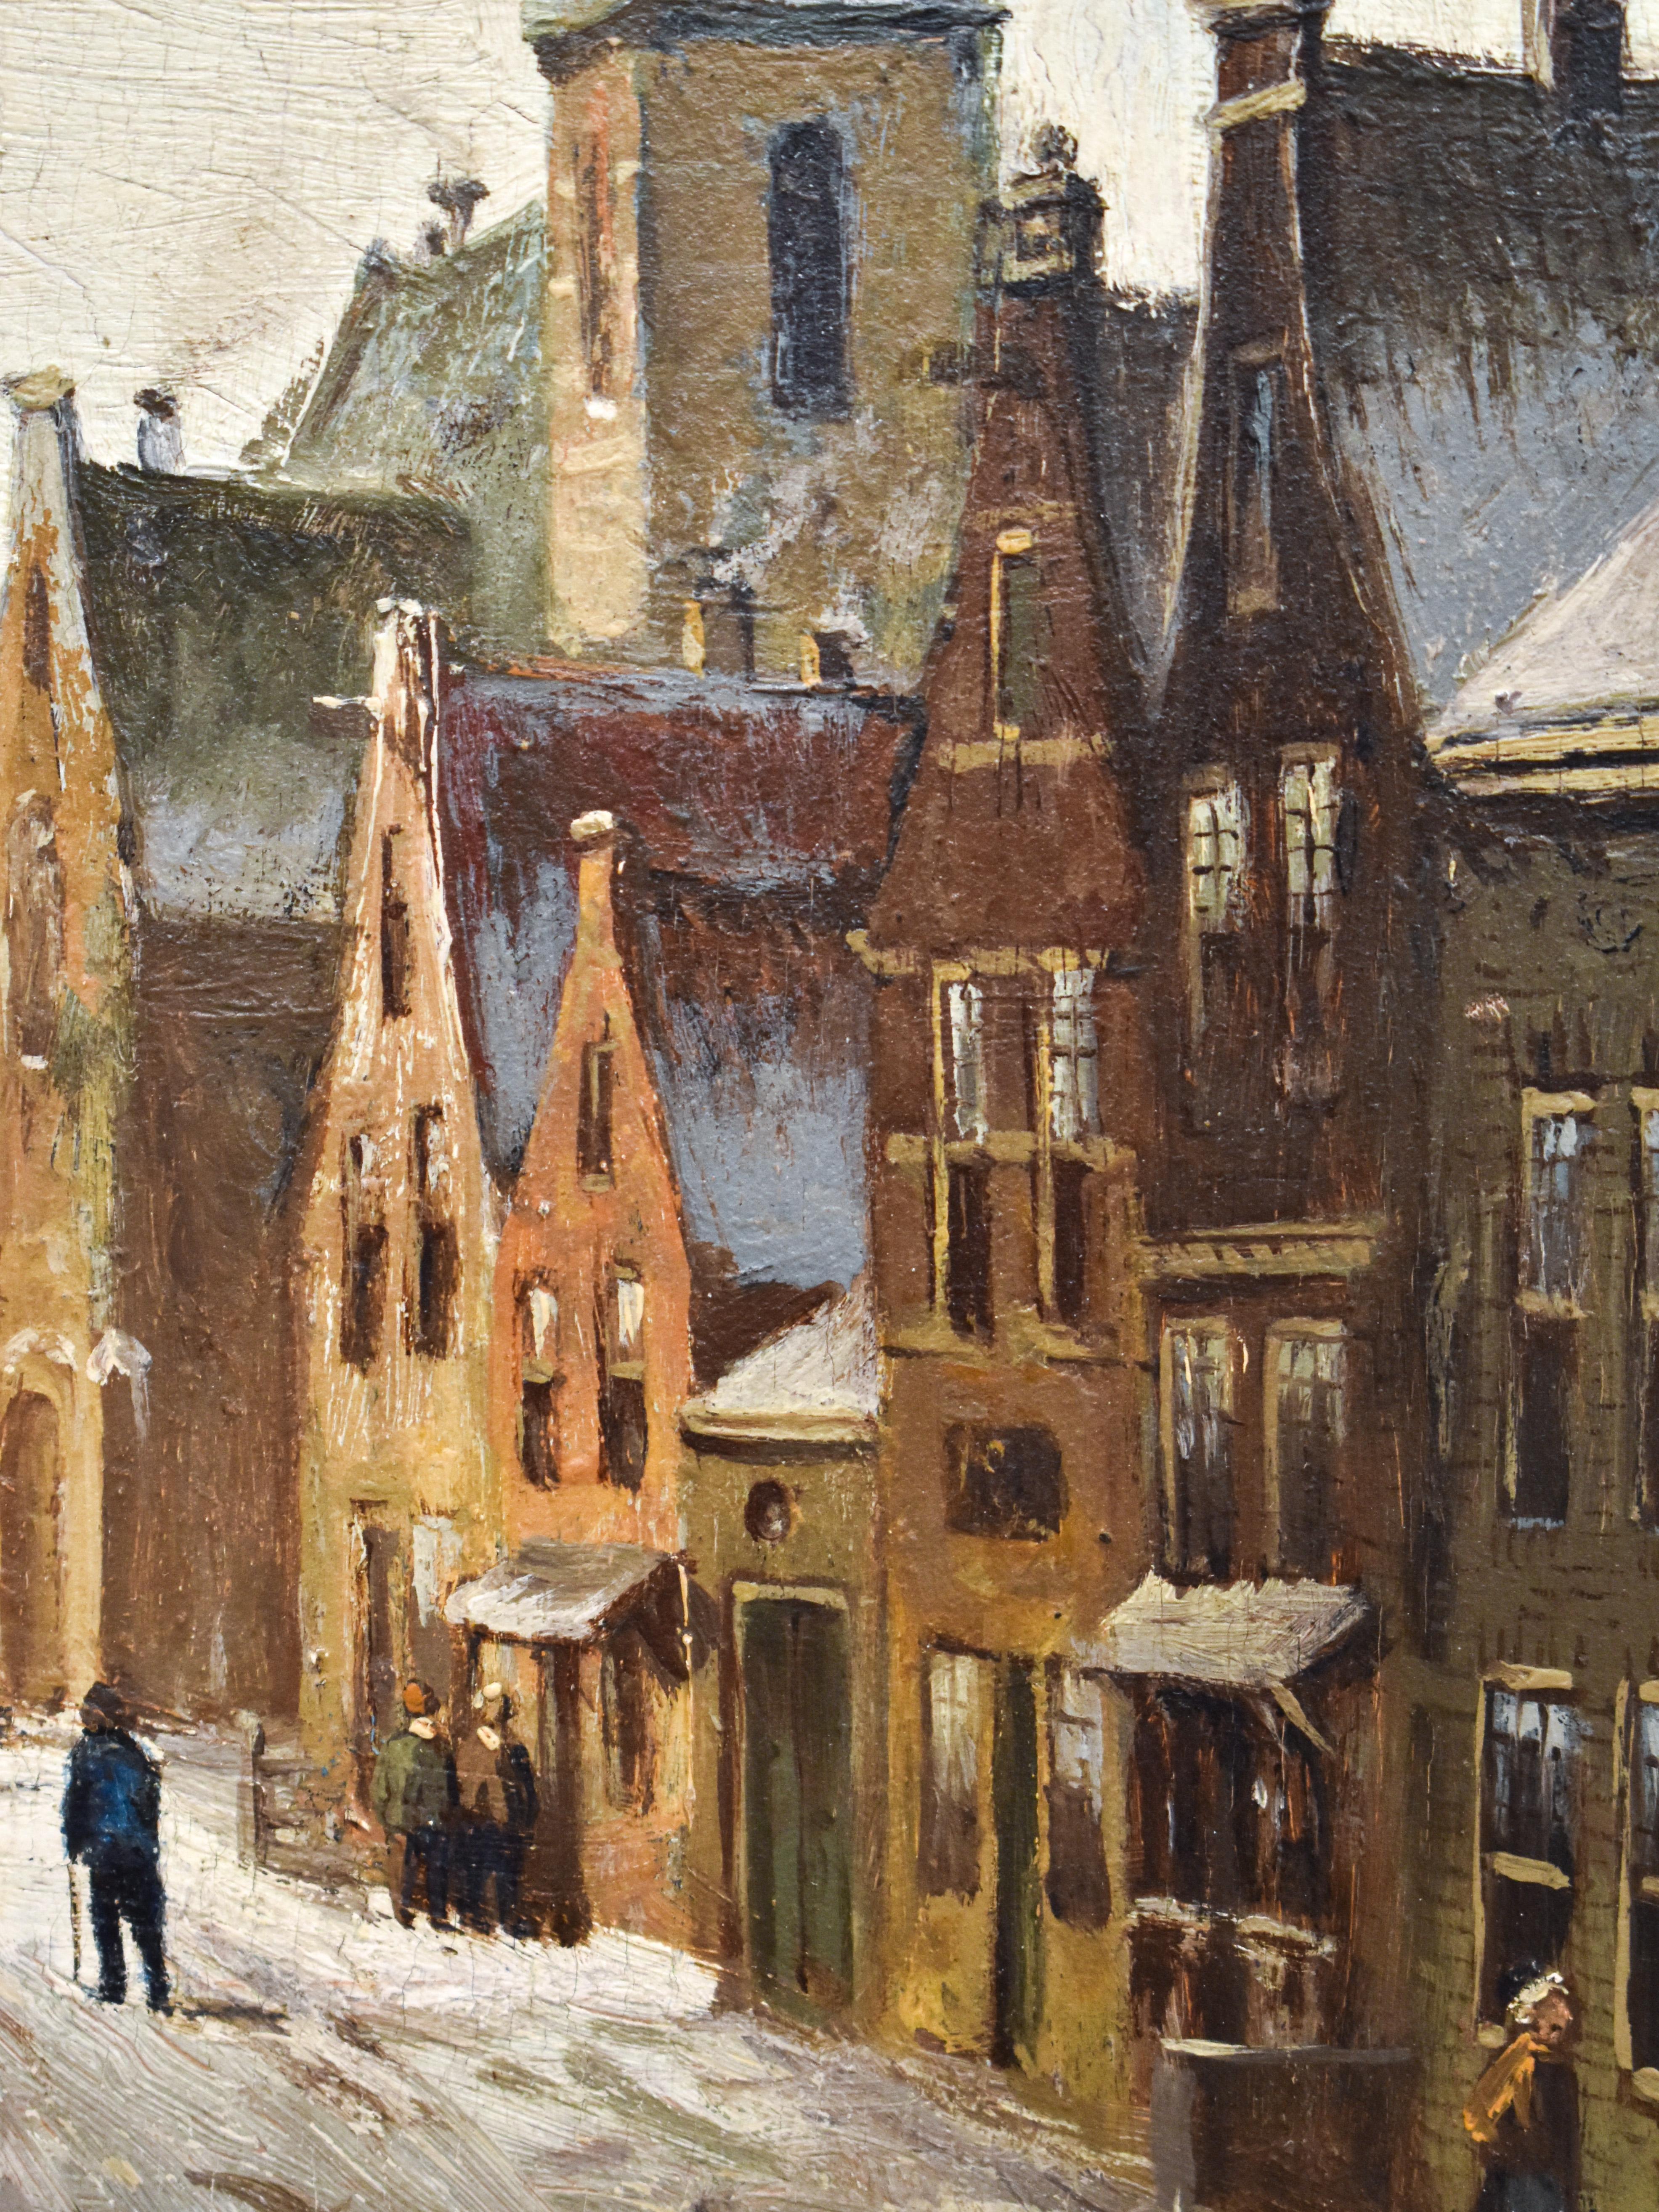 Cityscape in wintertime - O. R. de Jongh (1812-1896) - Oil paint on panel For Sale 7